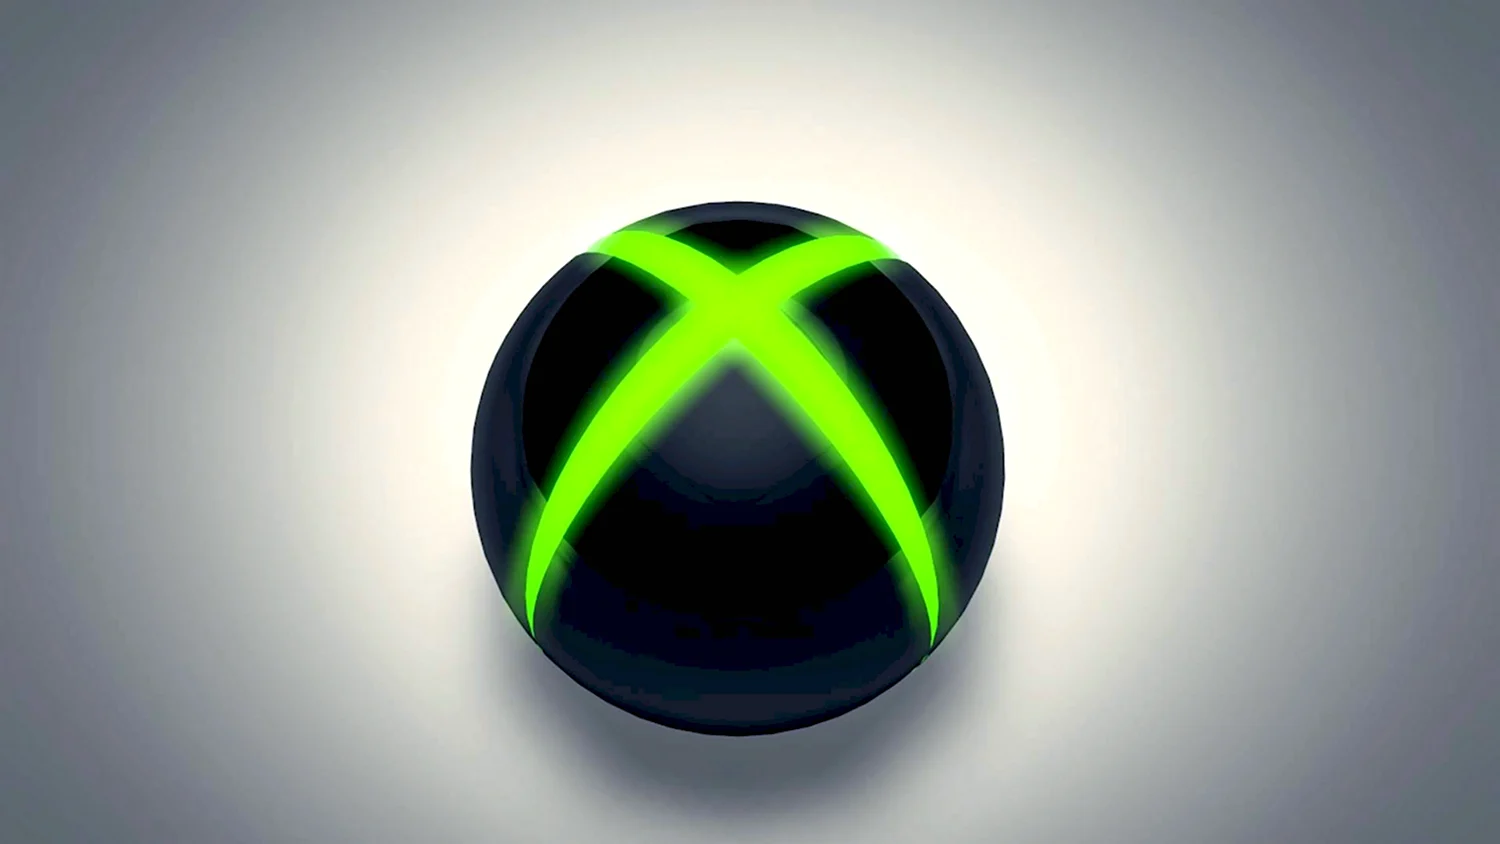 Xbox 360 s logo